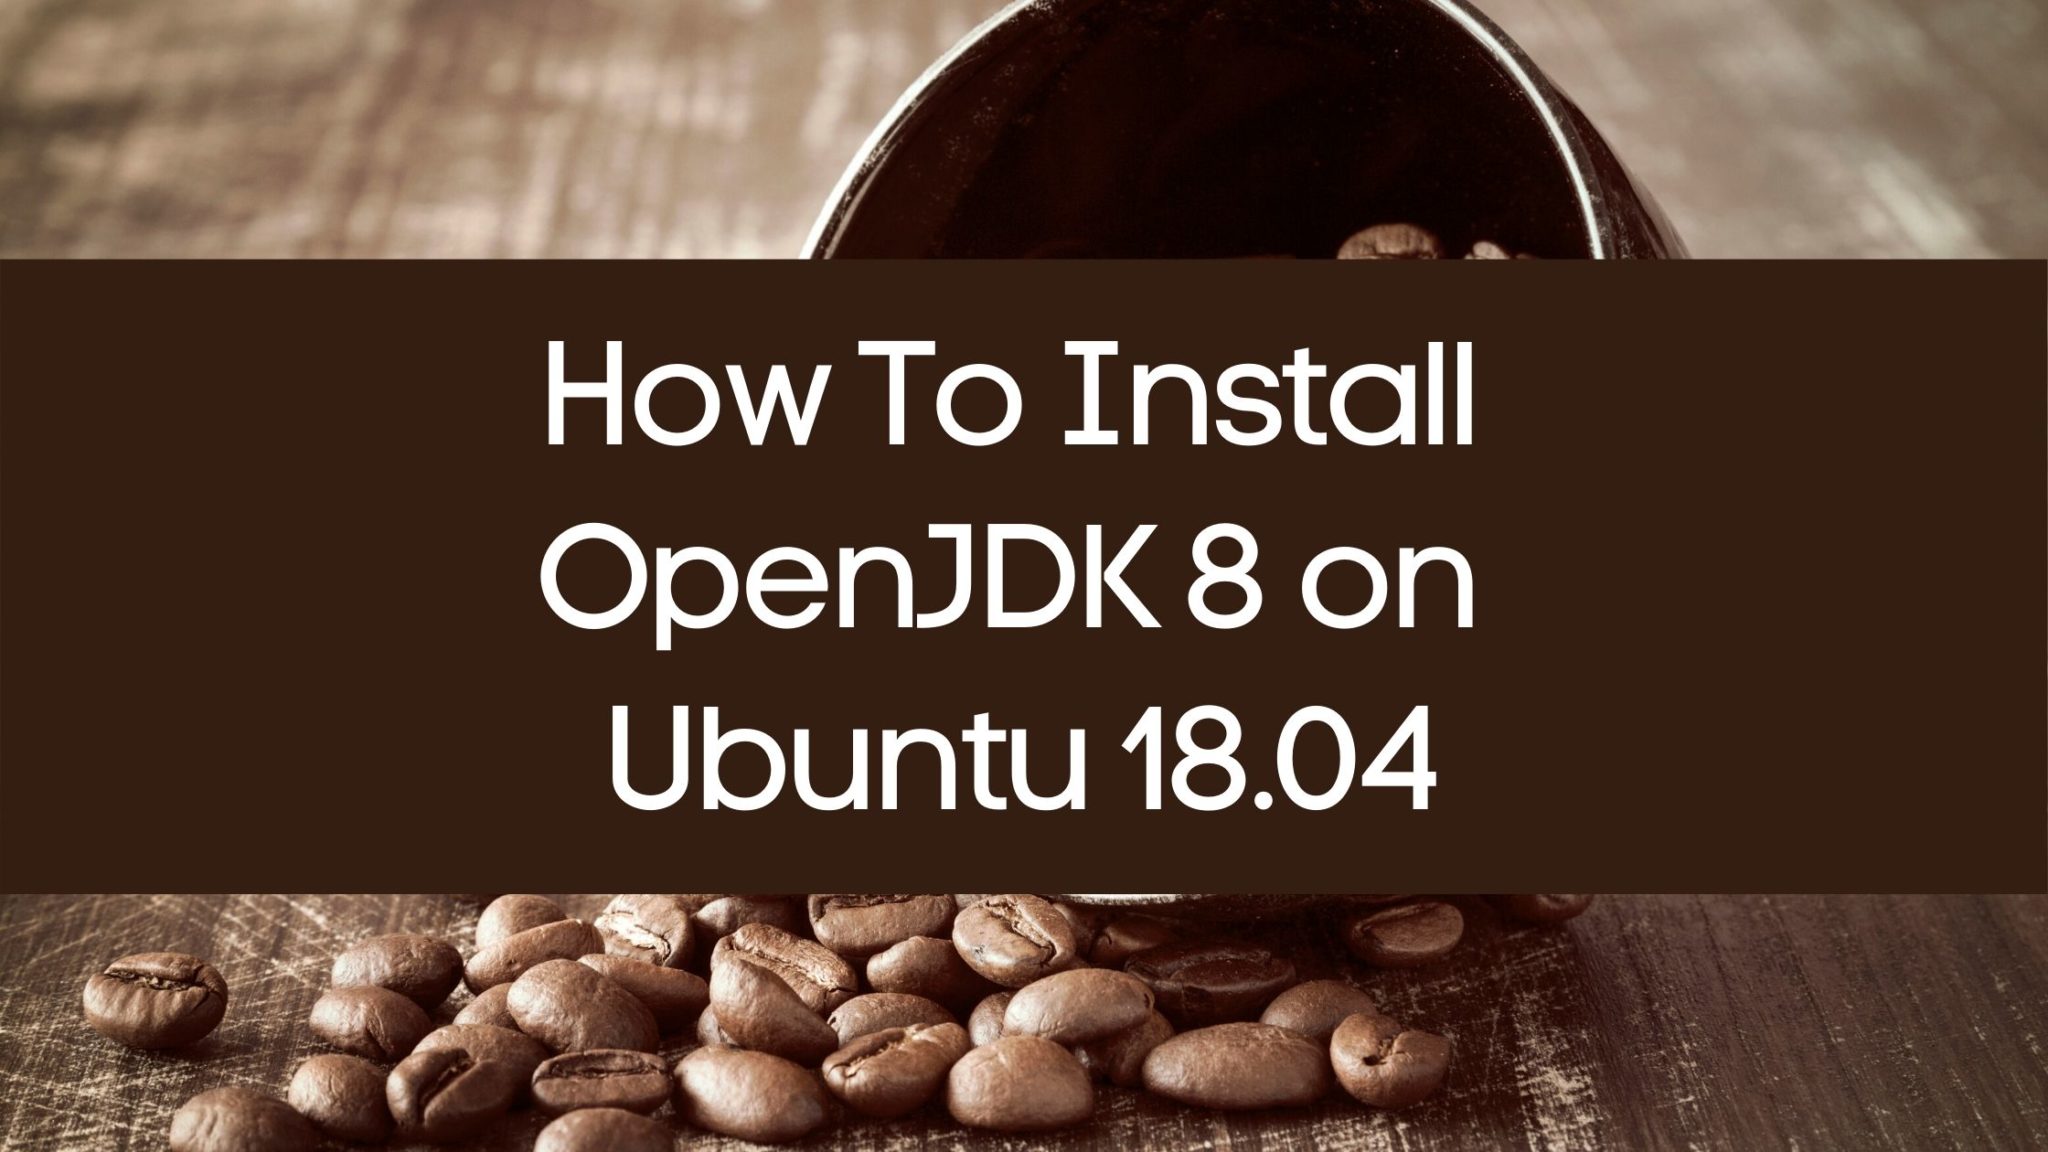 install openjdk 1.8